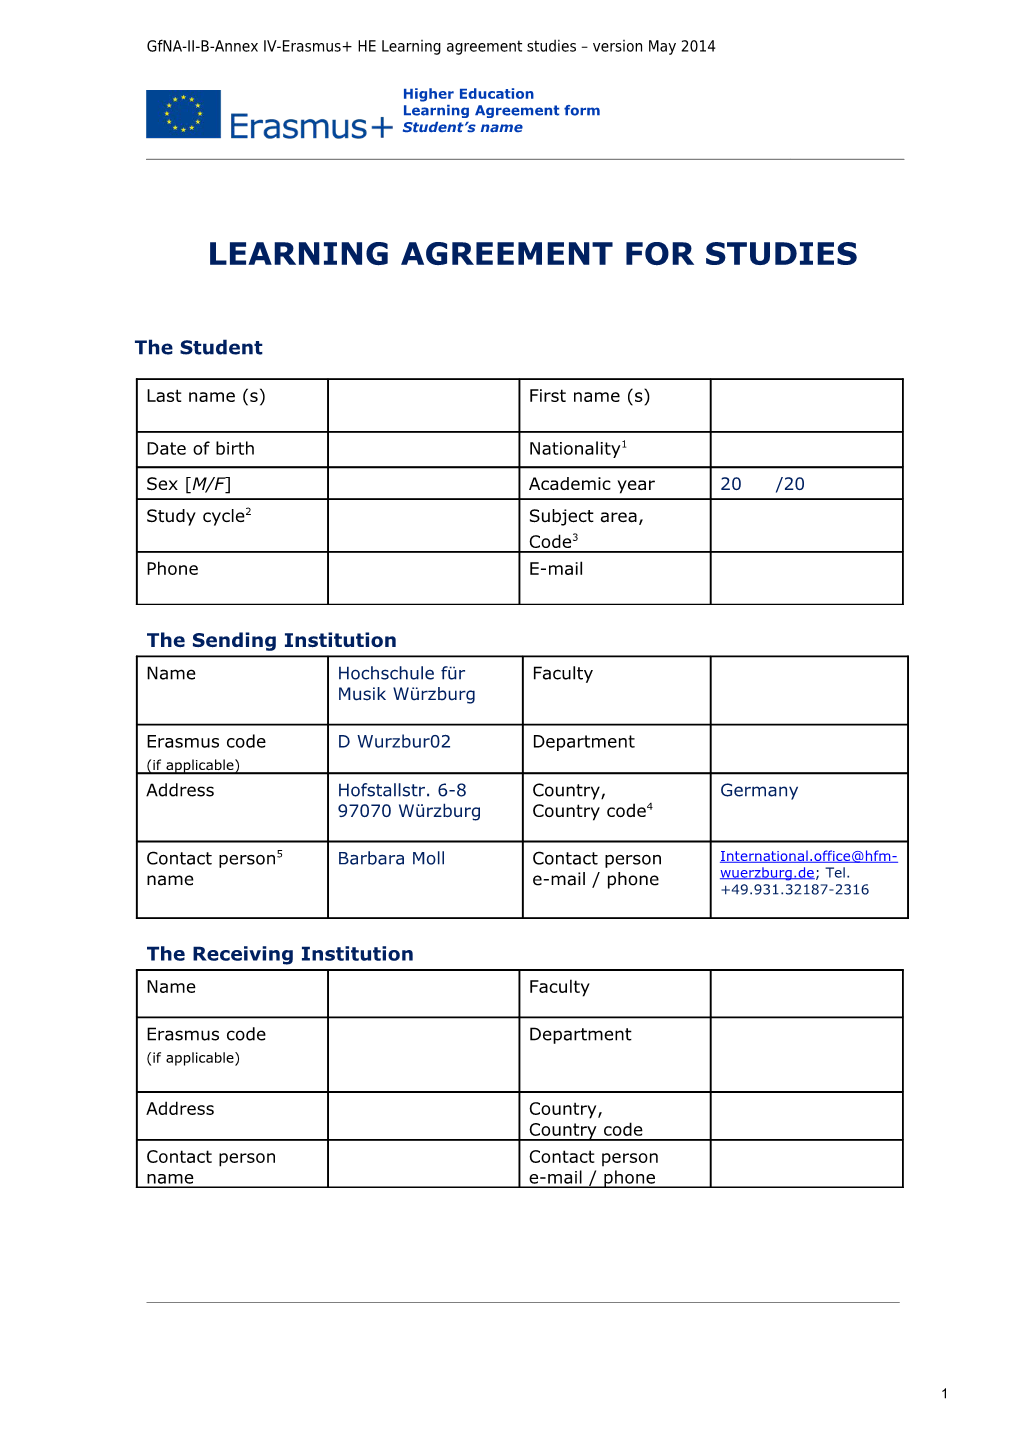 Gfna-II-B-Annex IV-Erasmus+ HE Learning Agreement Studies Version May 2014